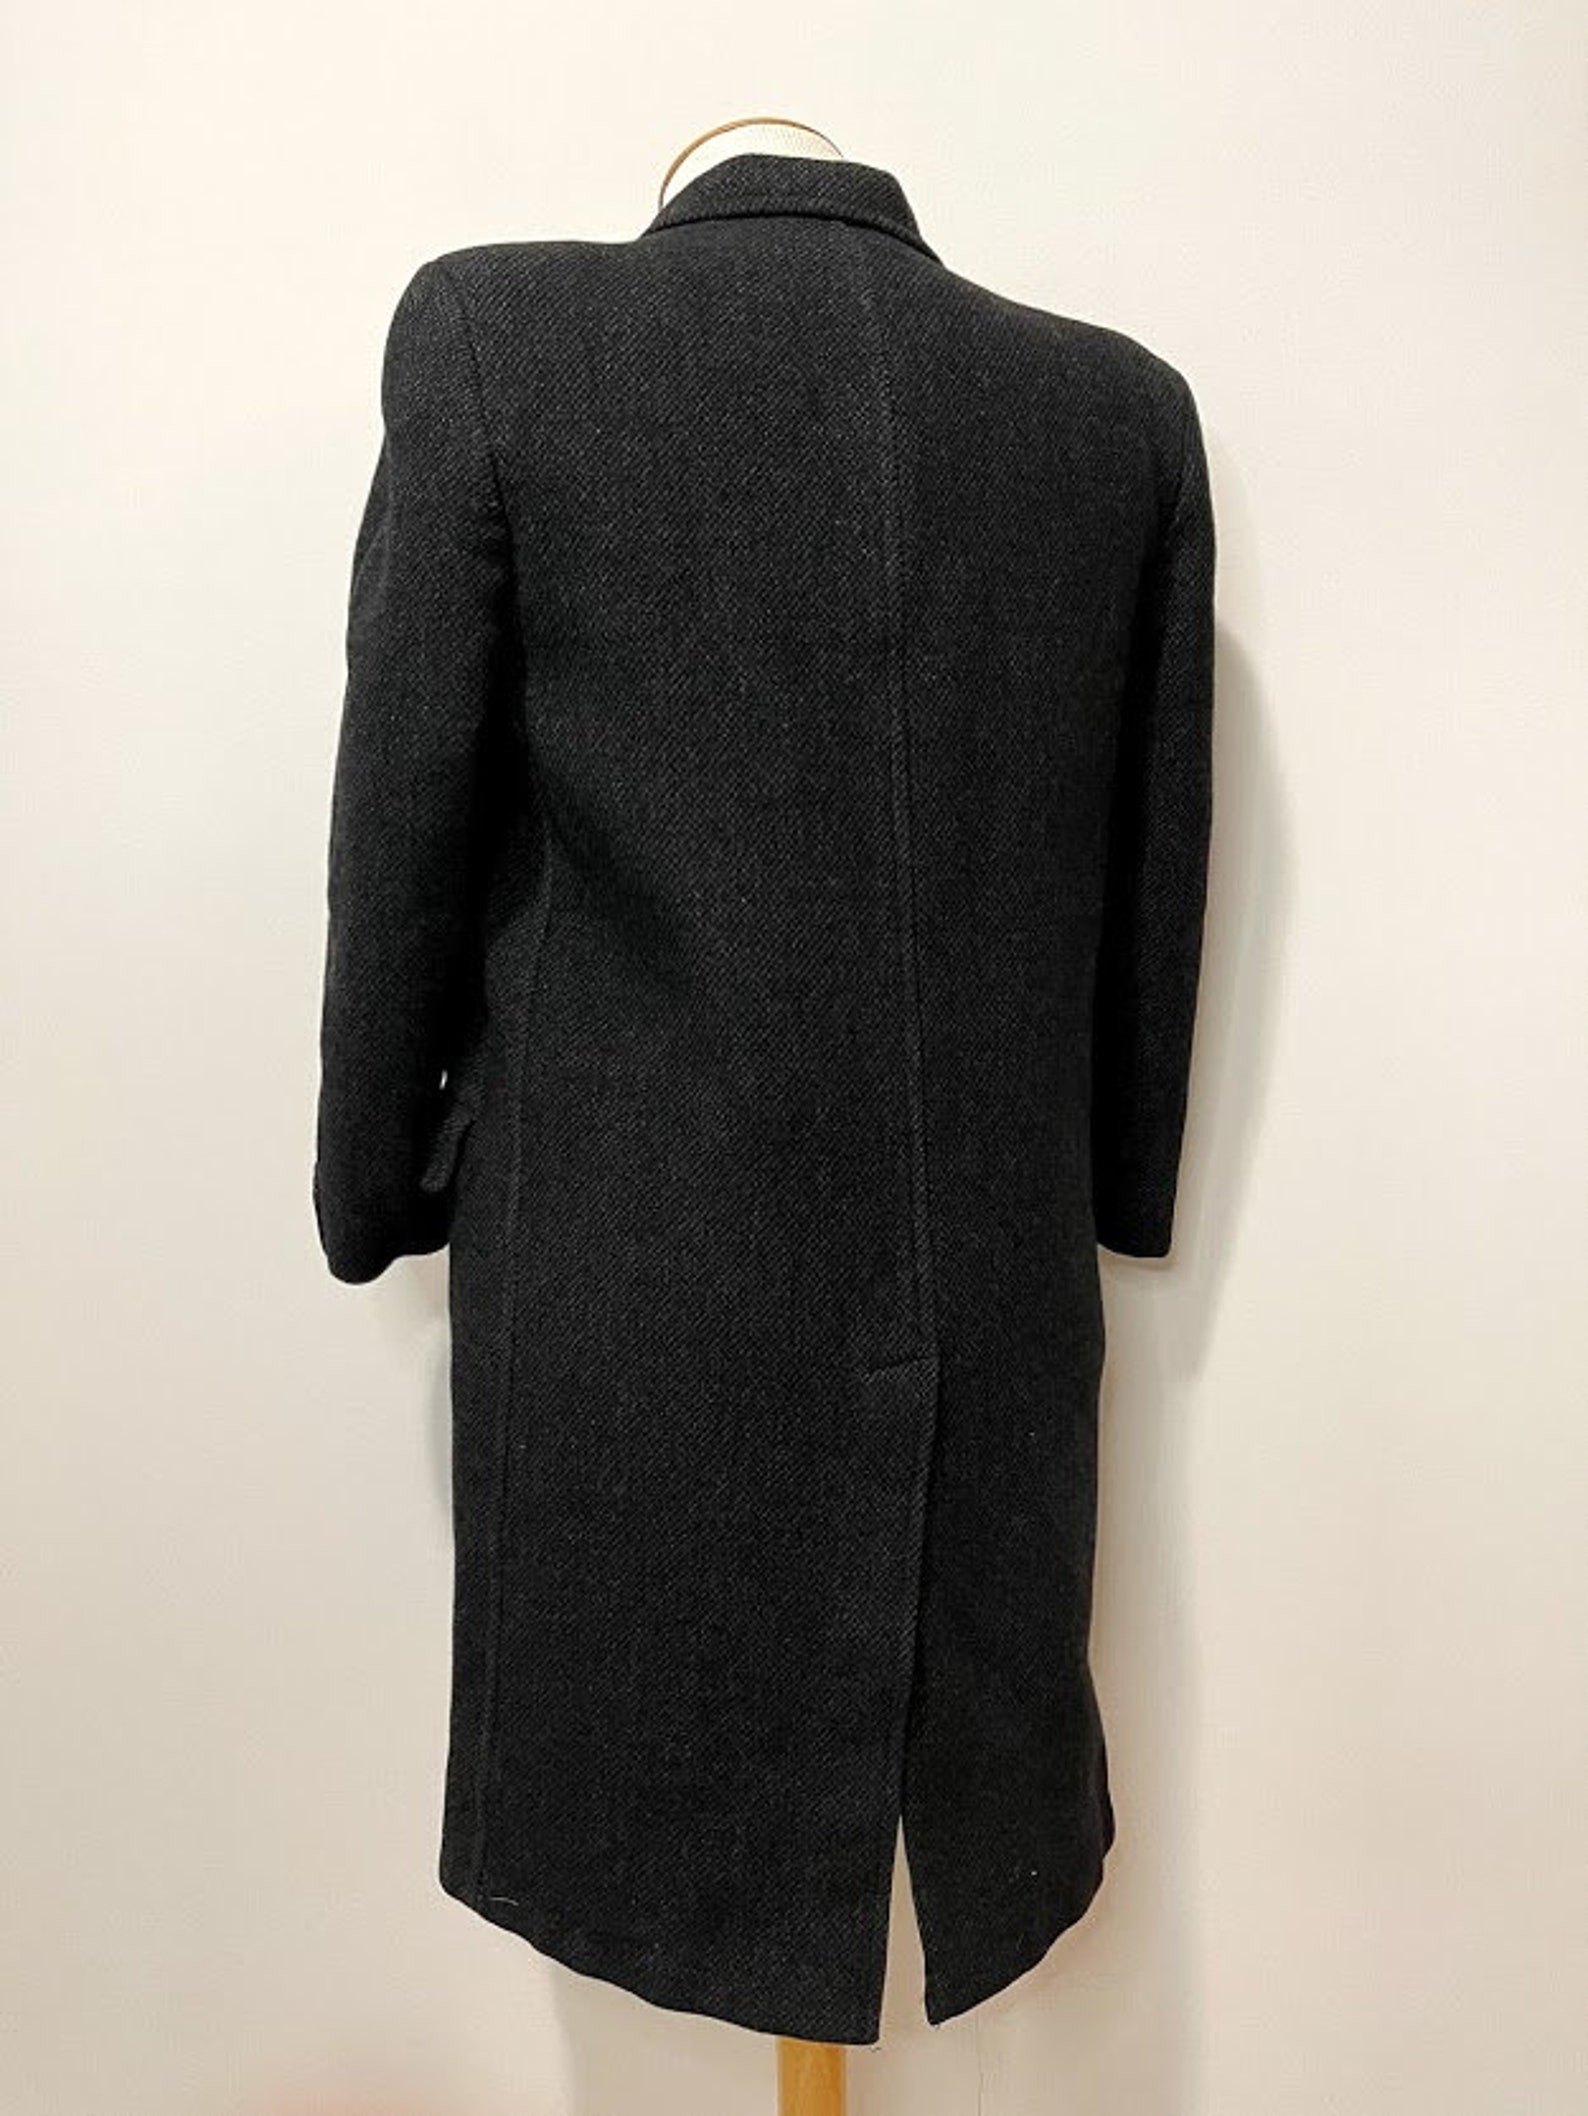 Vintage 1950's Men's Black Wool Overcoat Scottish | Etsy